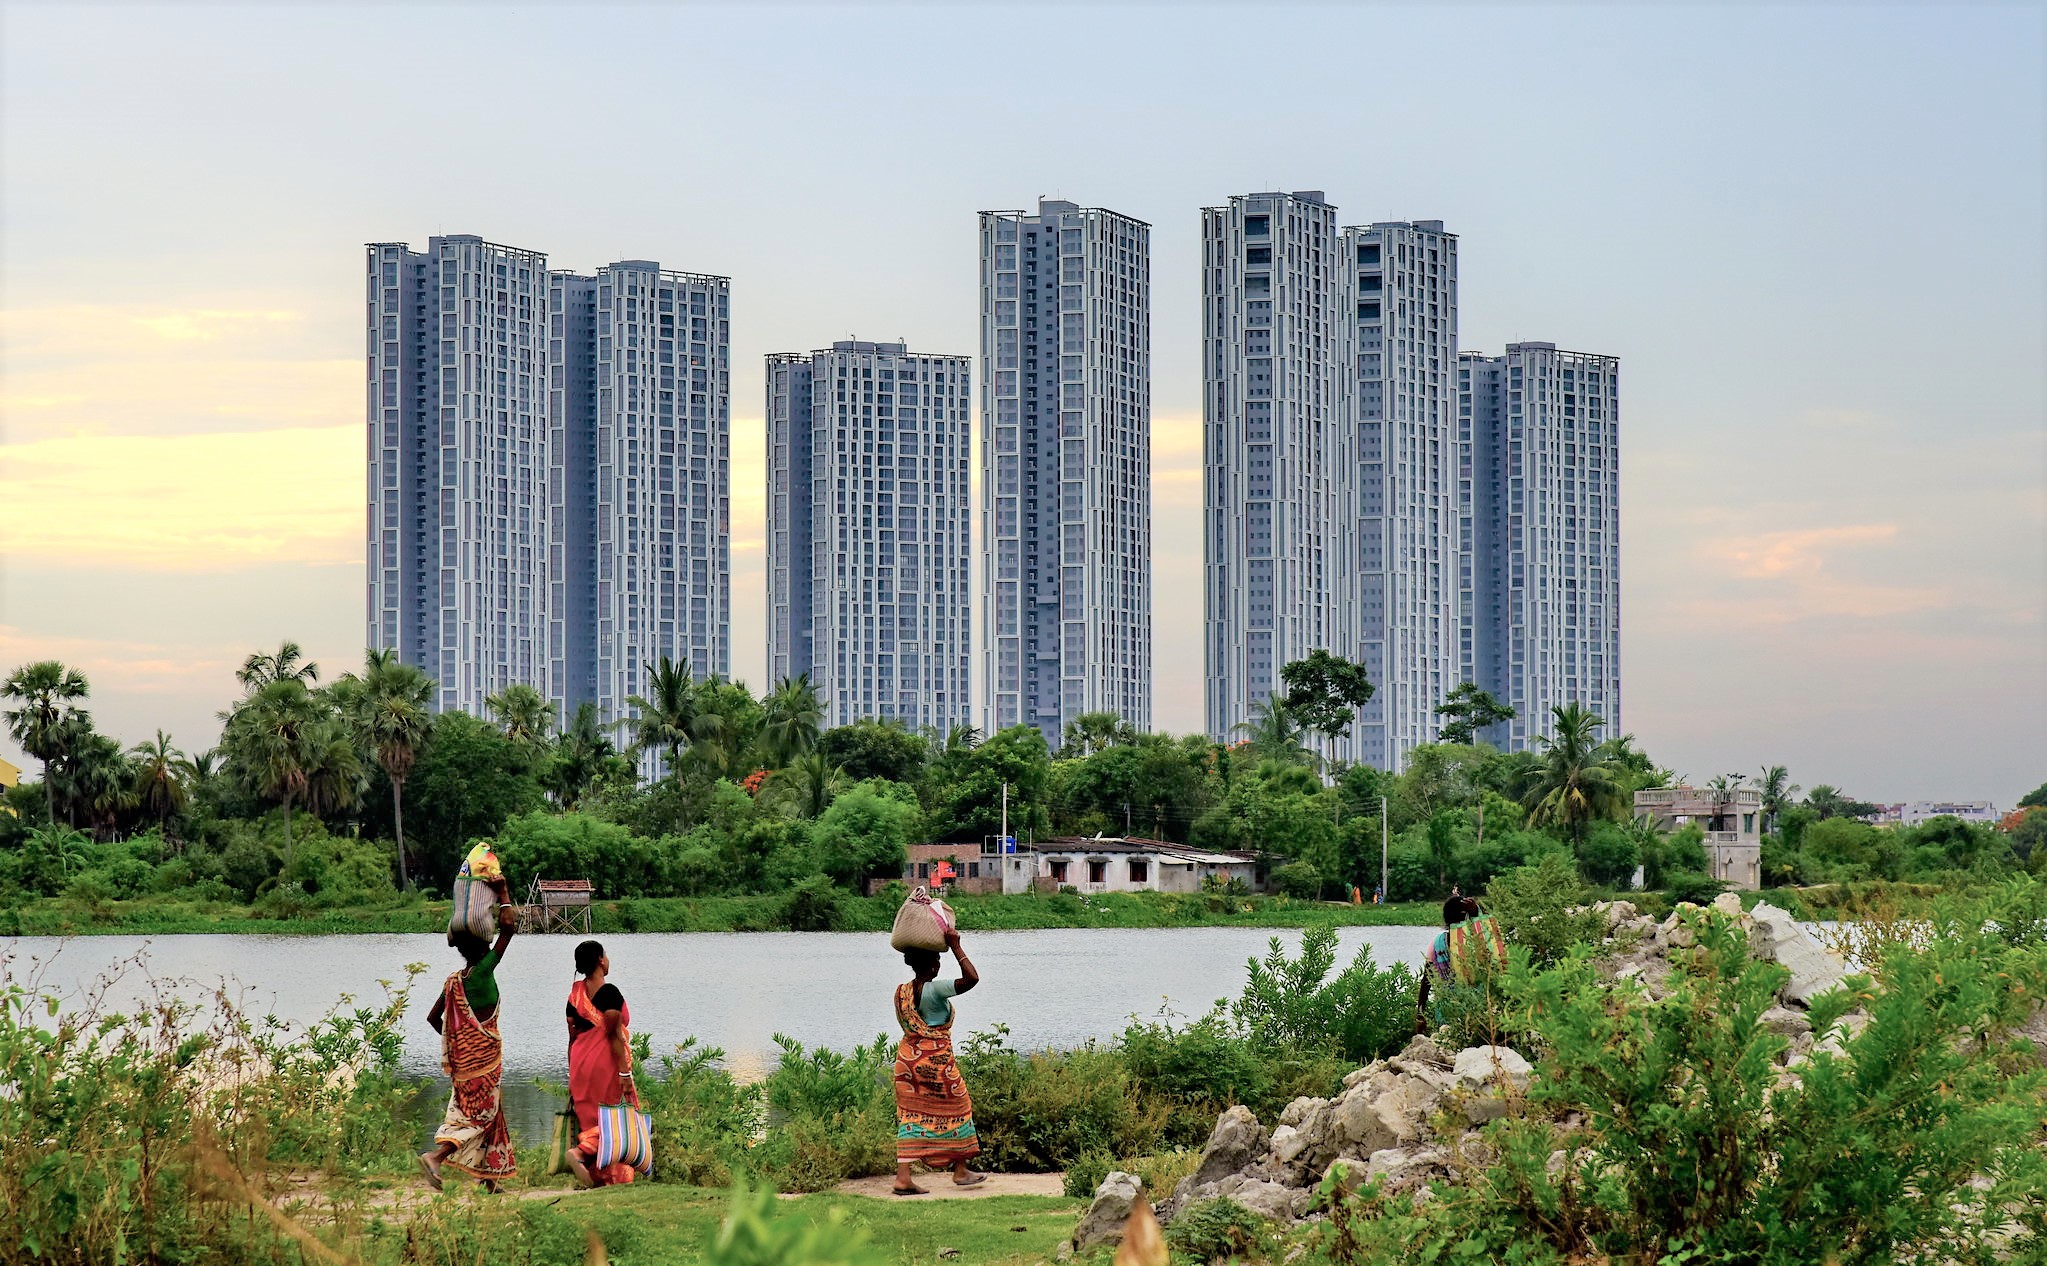 Urbanization. Kolkata Outskirts. Credits to: Abhijit Kar Gupta (CC BY 2.0)